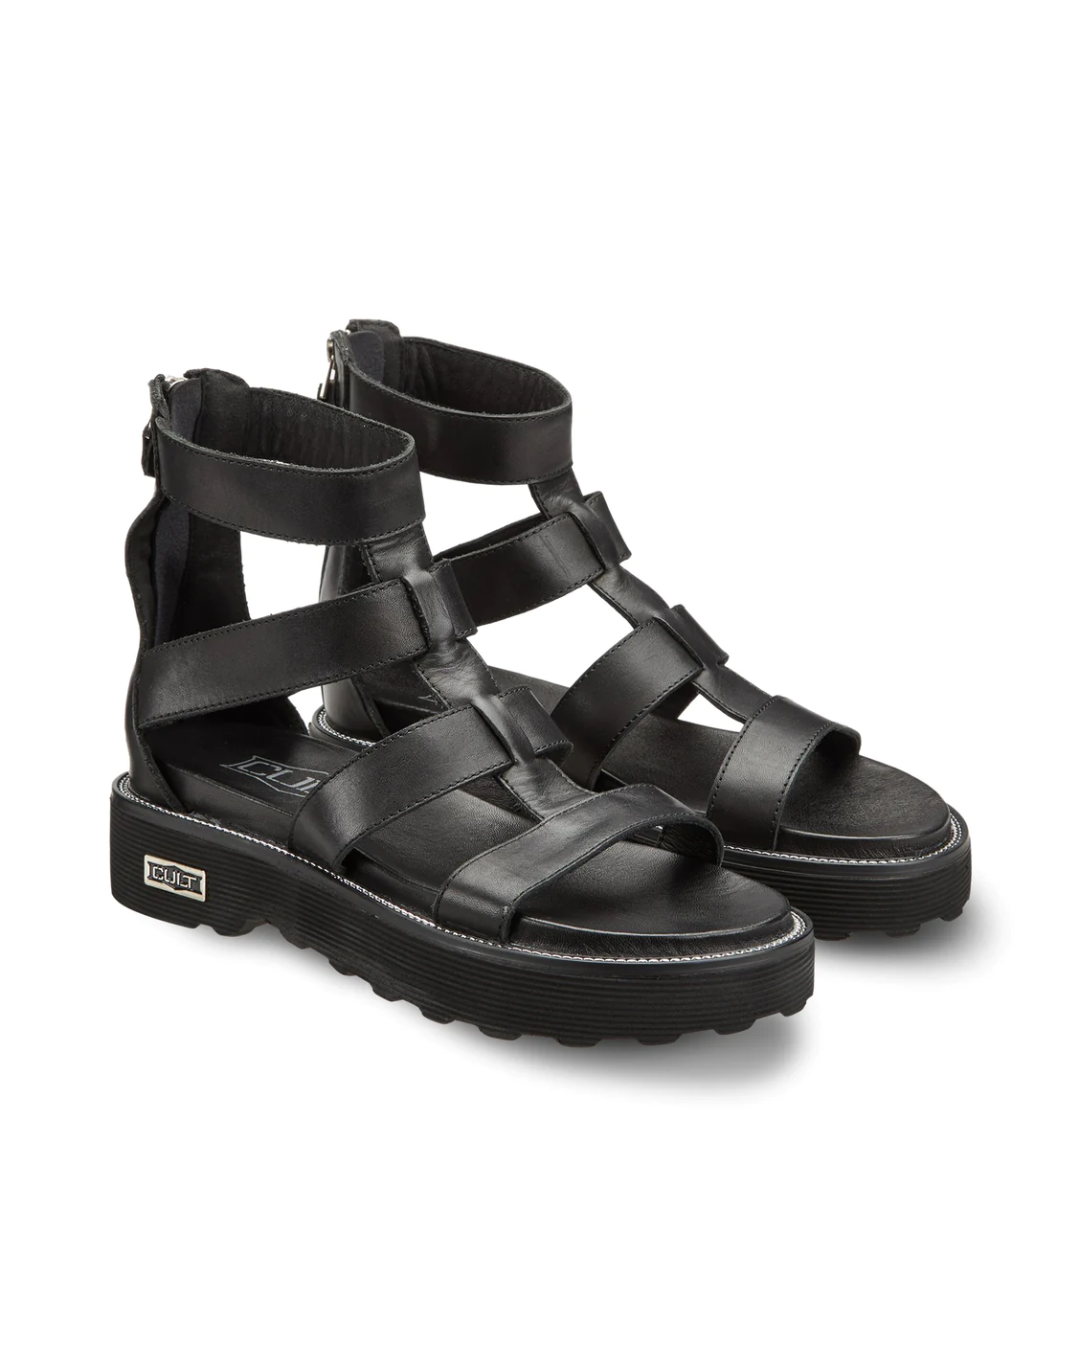 Cult Ziggy 3290 sandal W Leather Black